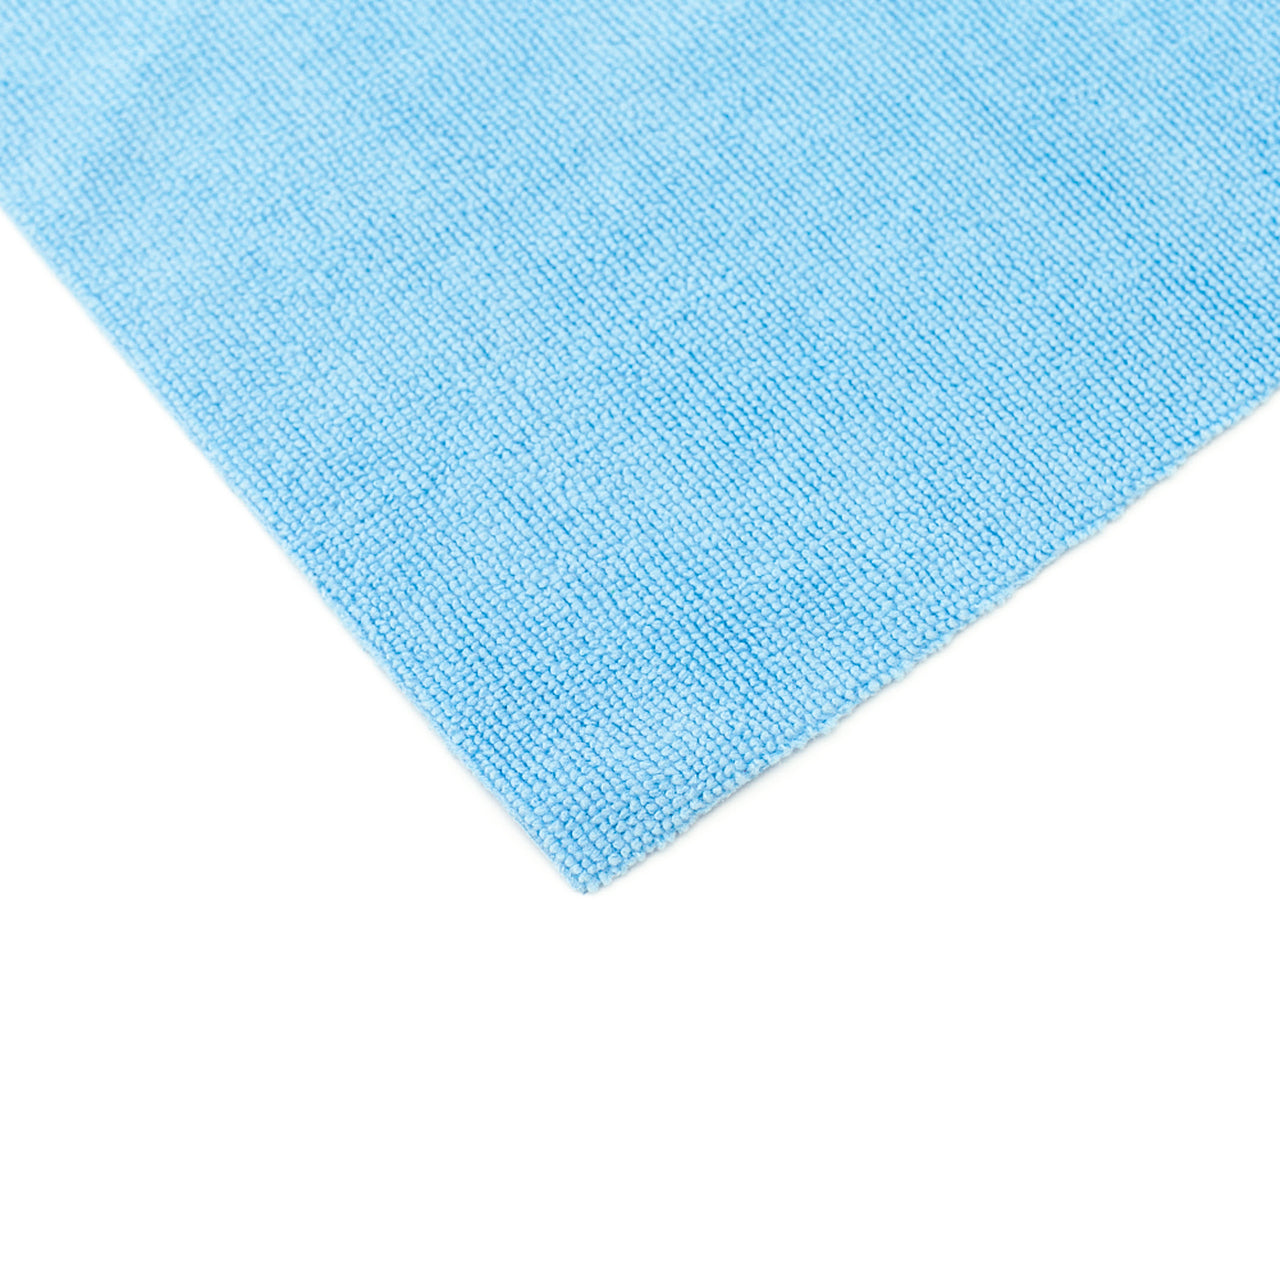 DI Microfiber Waffle Weave Glass Cleaning Towel Light Blue - 16 x 16